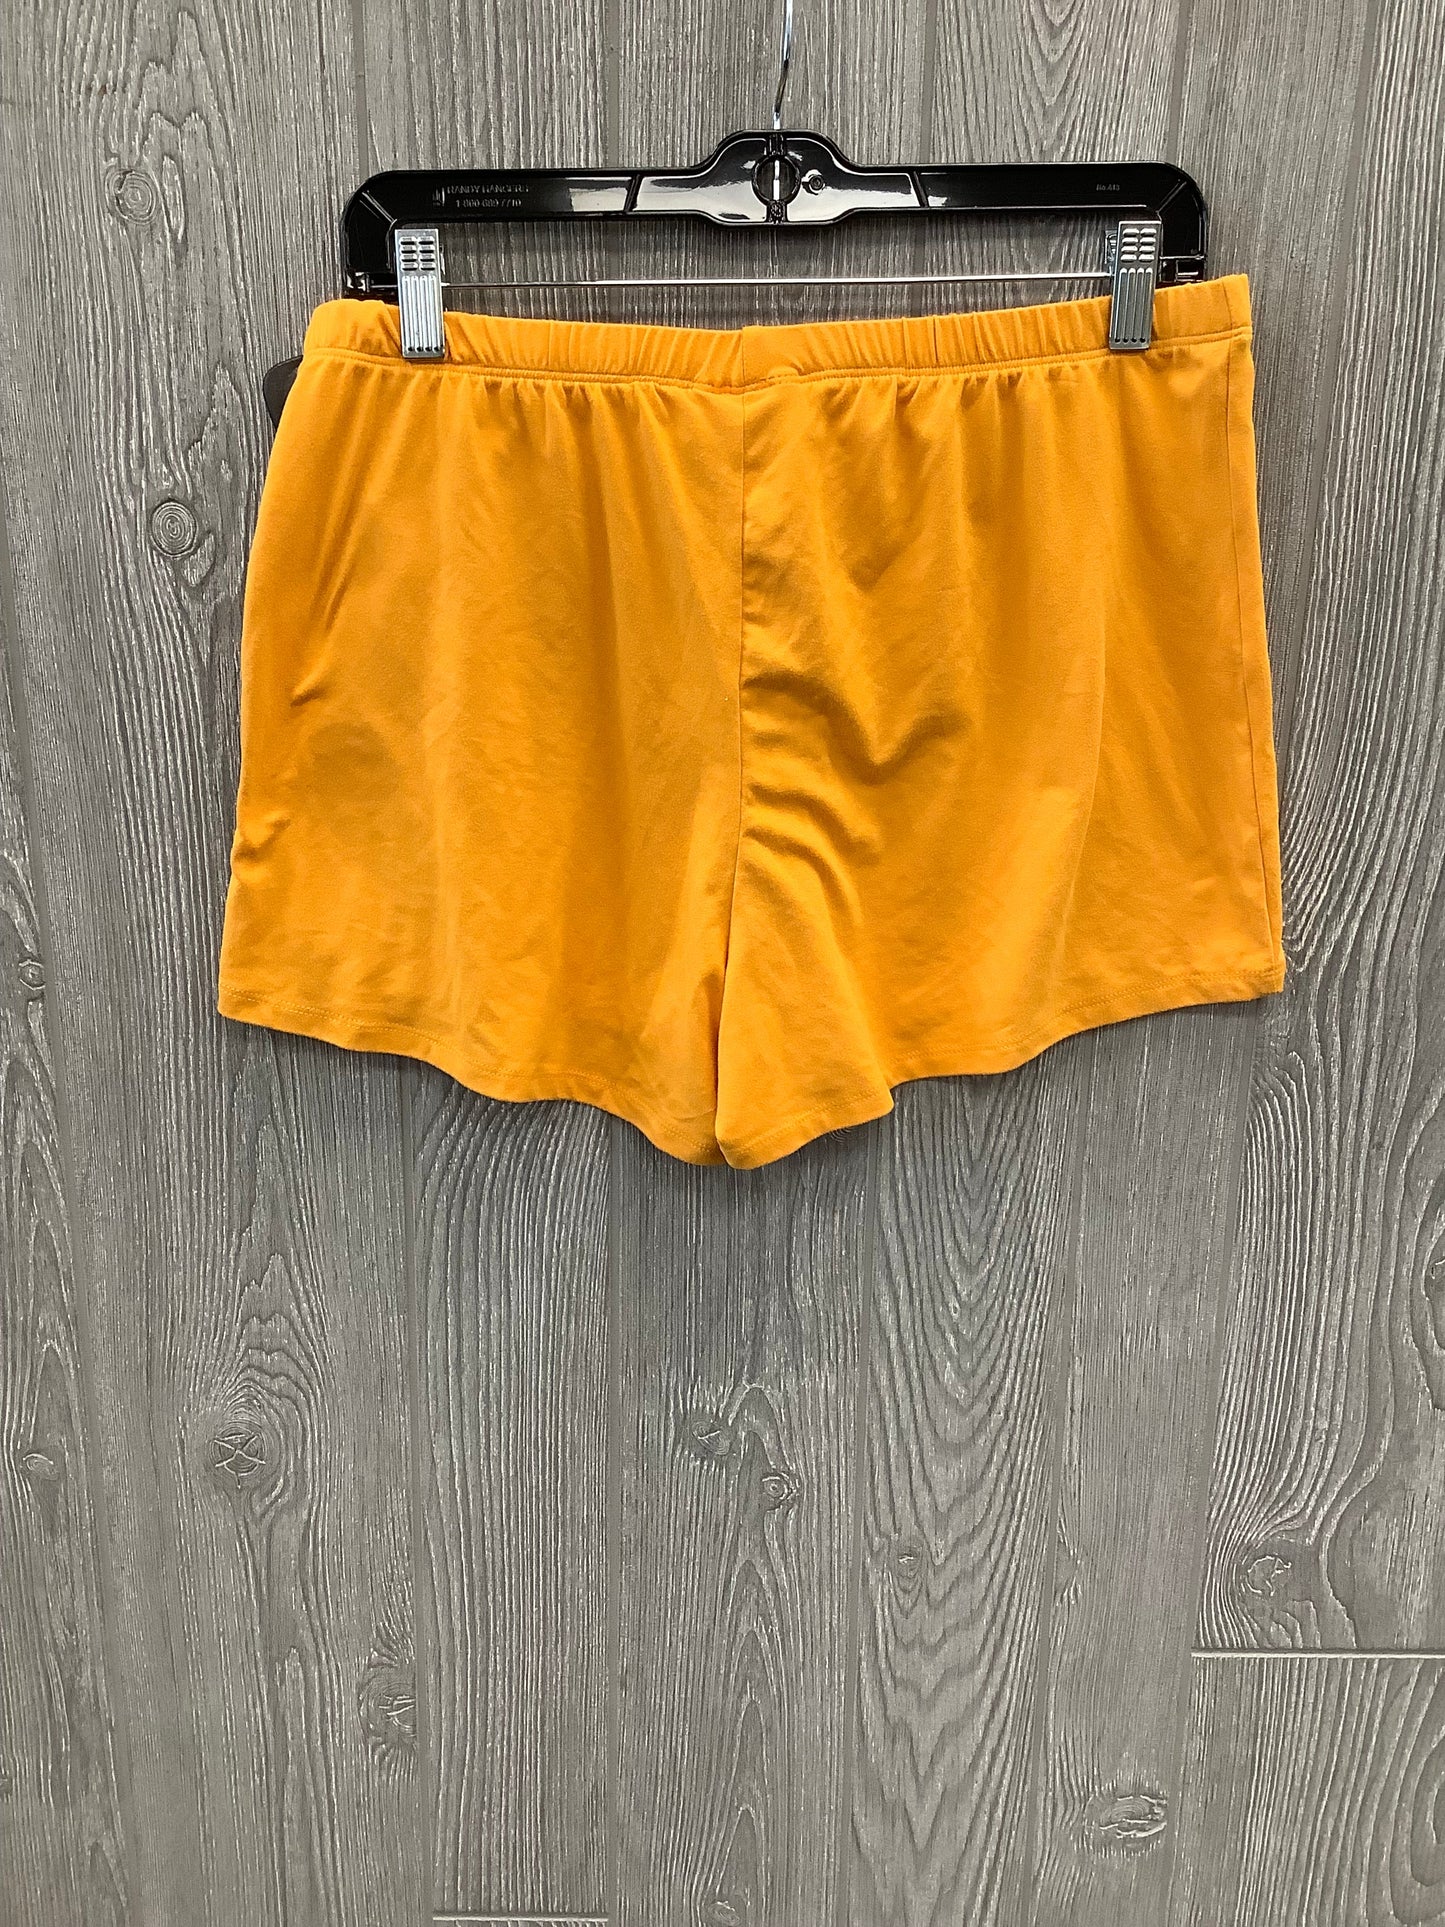 Shorts By Bobbie Brooks  Size: M